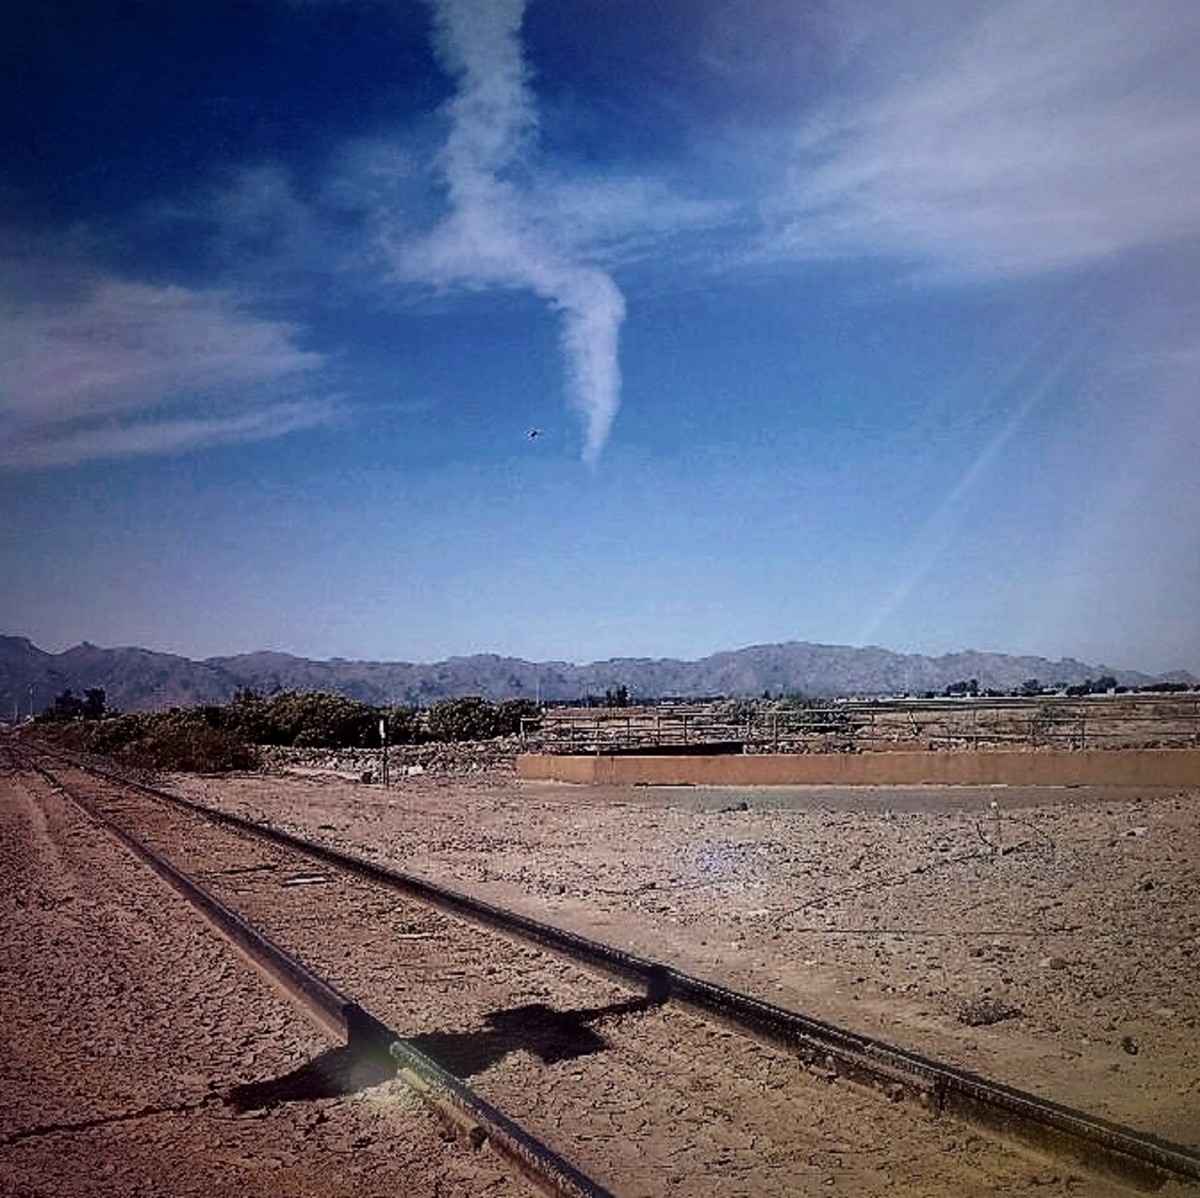 The Railroad Tracks